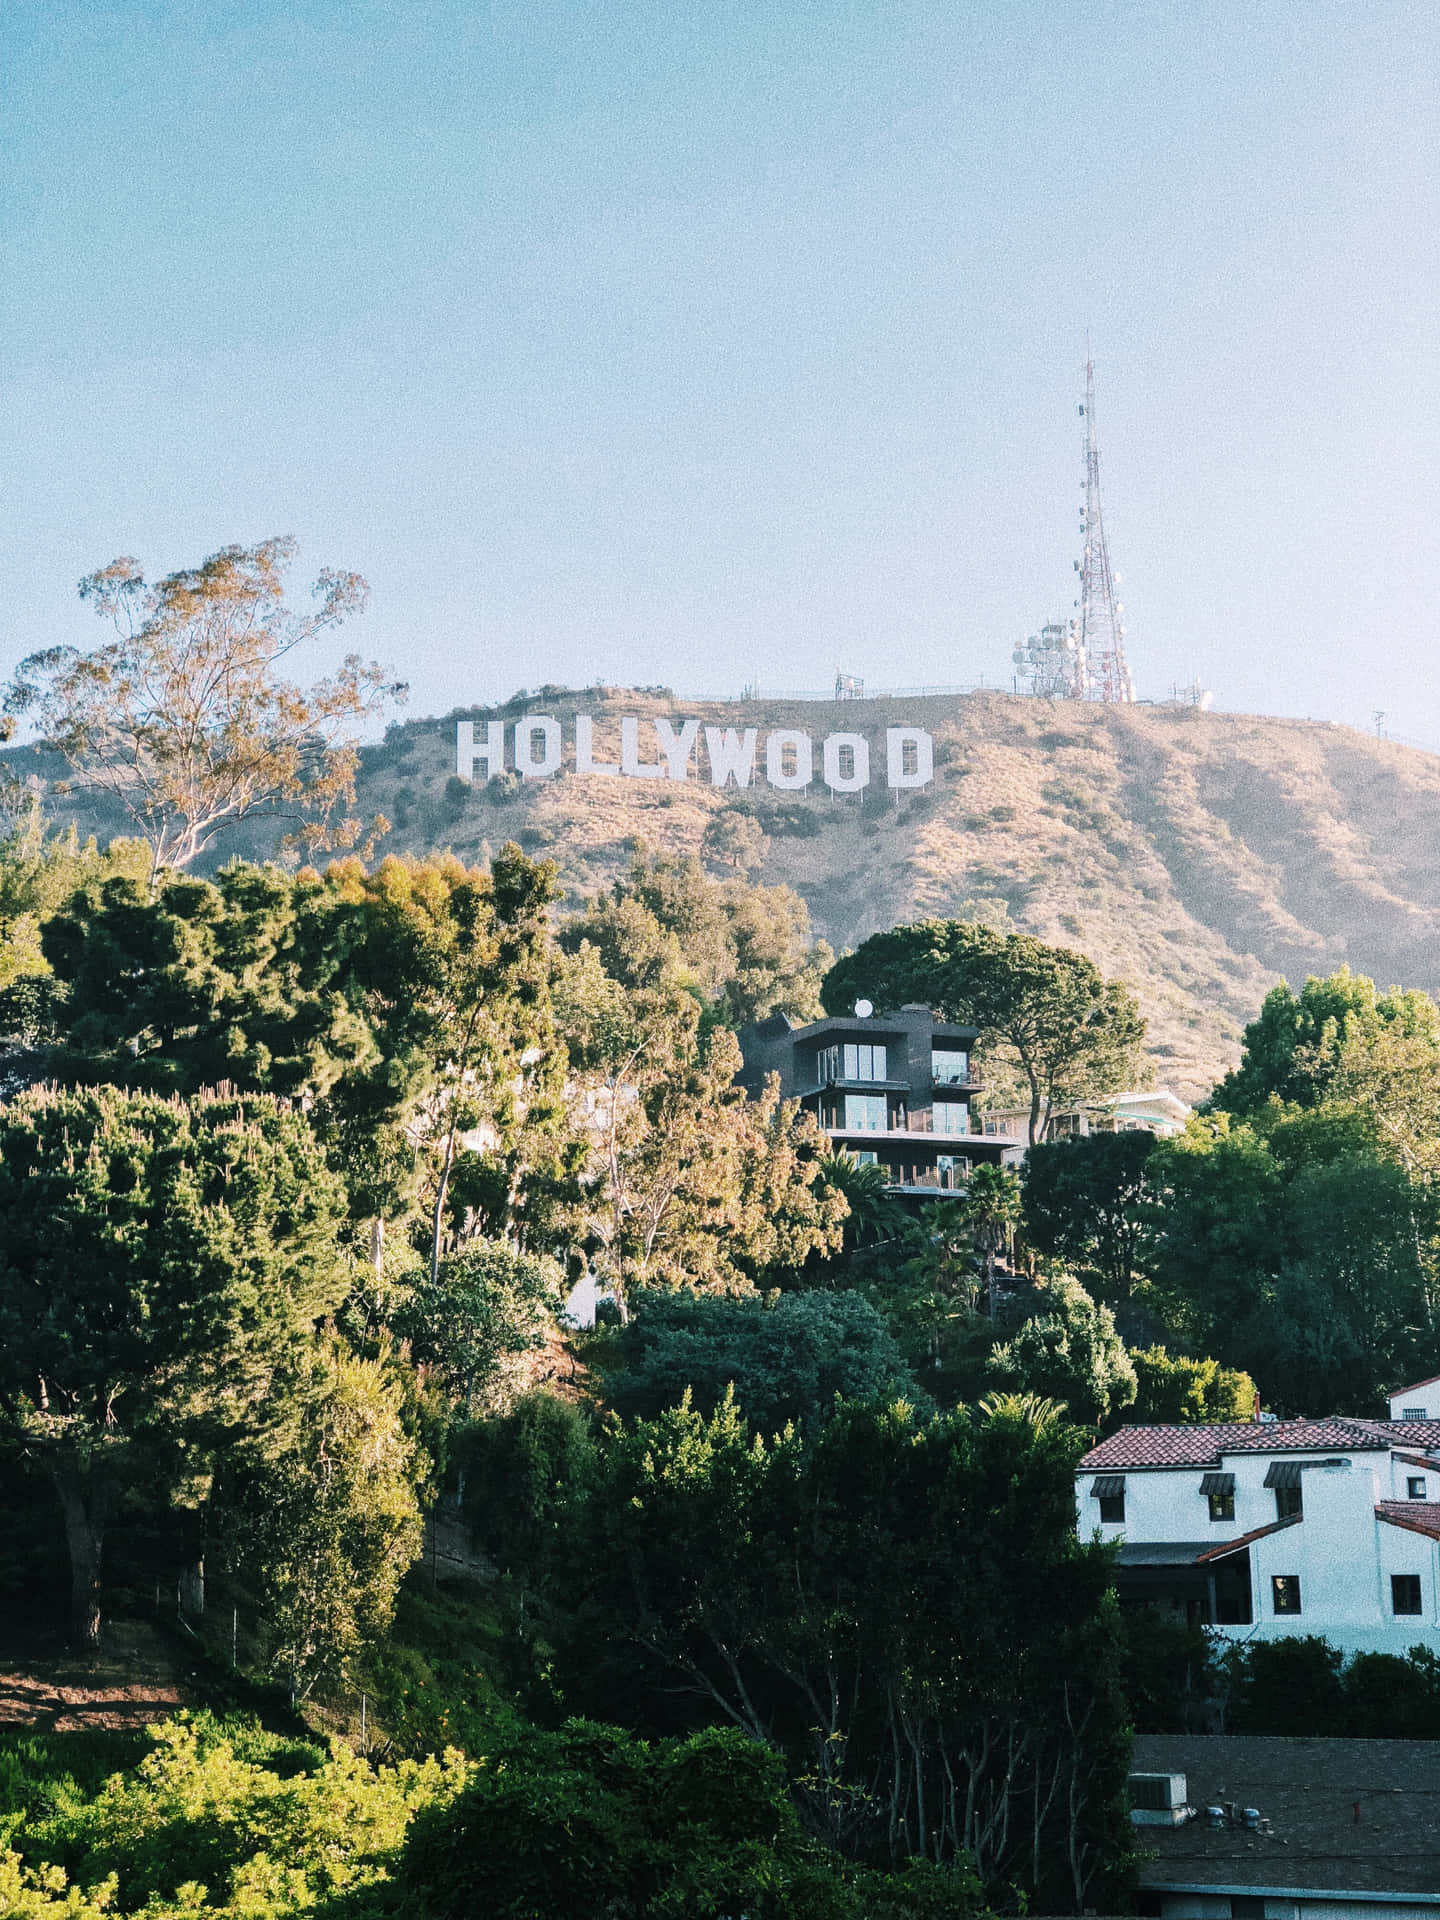 Hintergrundbildvon Hollywood In Der Nähe Des Santa Monica Boulevards.